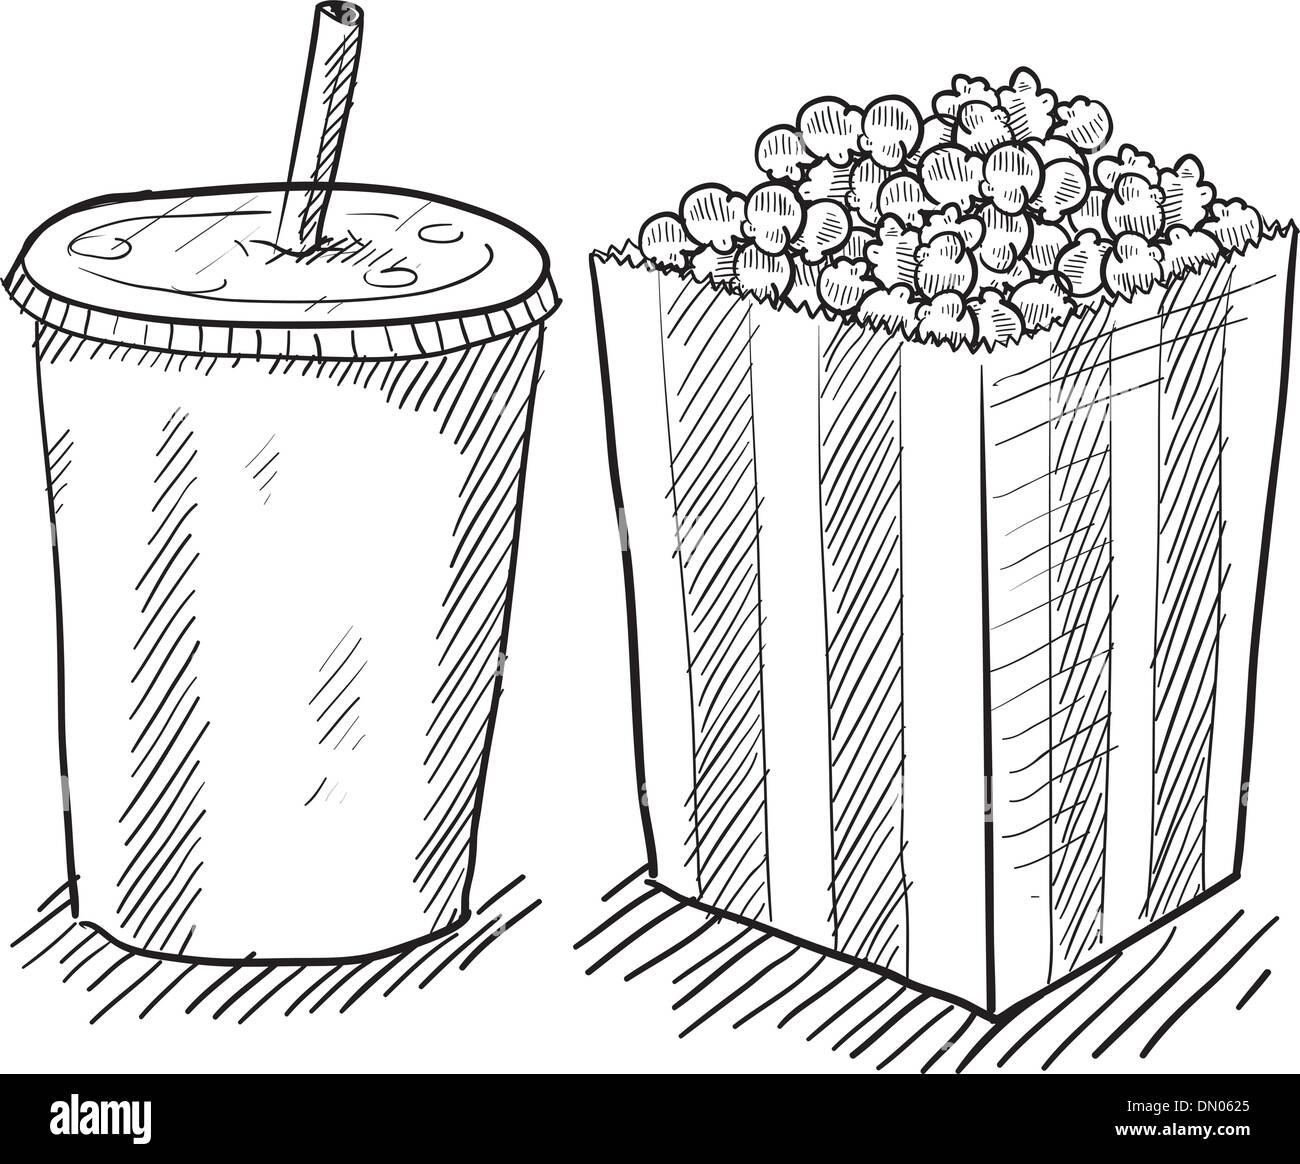 Film-Popcorn und Getränke-Skizze Stock Vektor